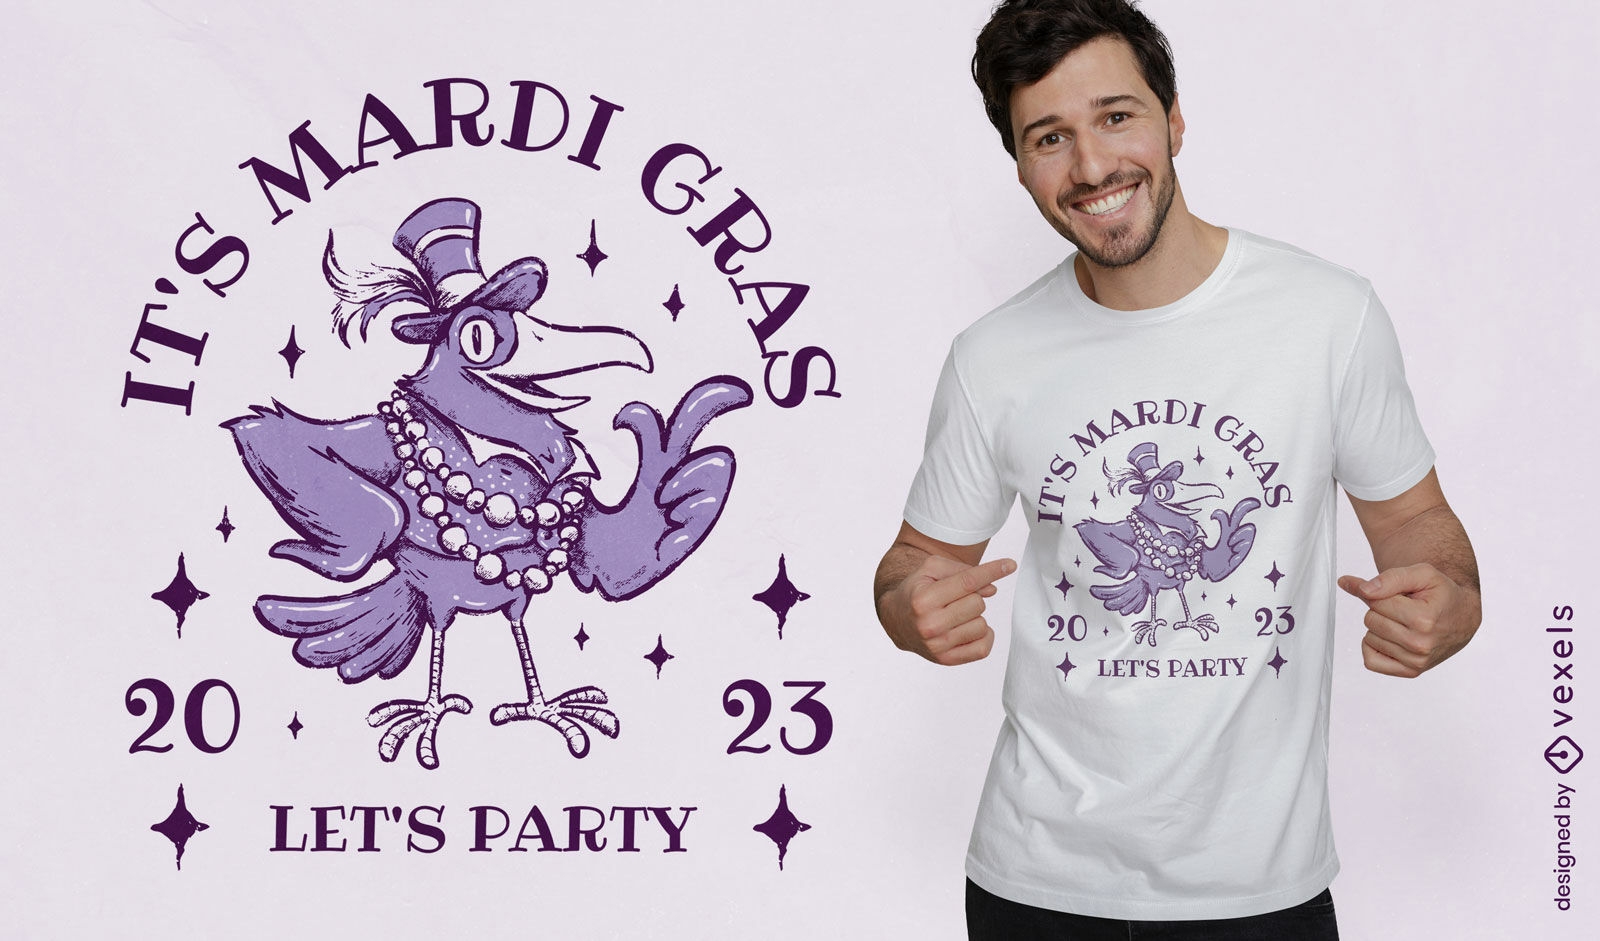 P?ssaro de Mardi gras comemorando design de camiseta